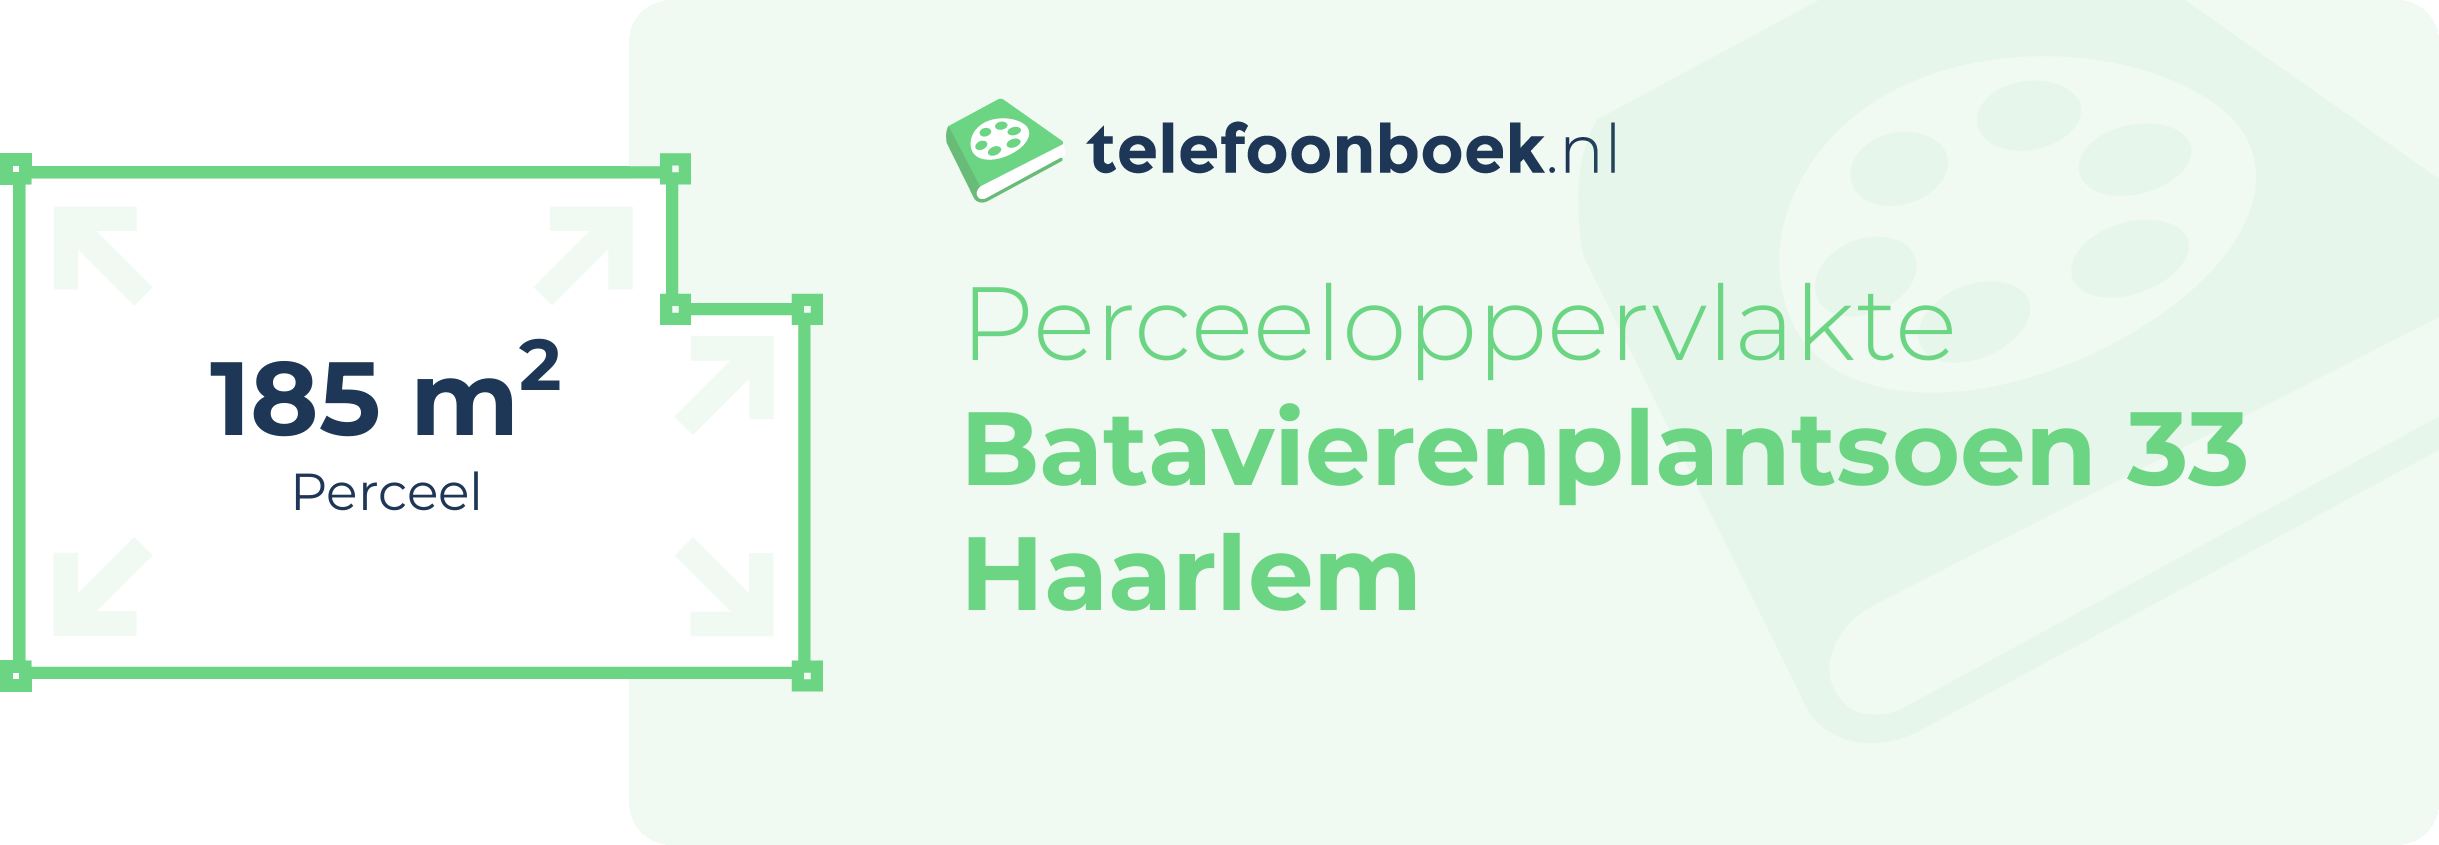 Perceeloppervlakte Batavierenplantsoen 33 Haarlem